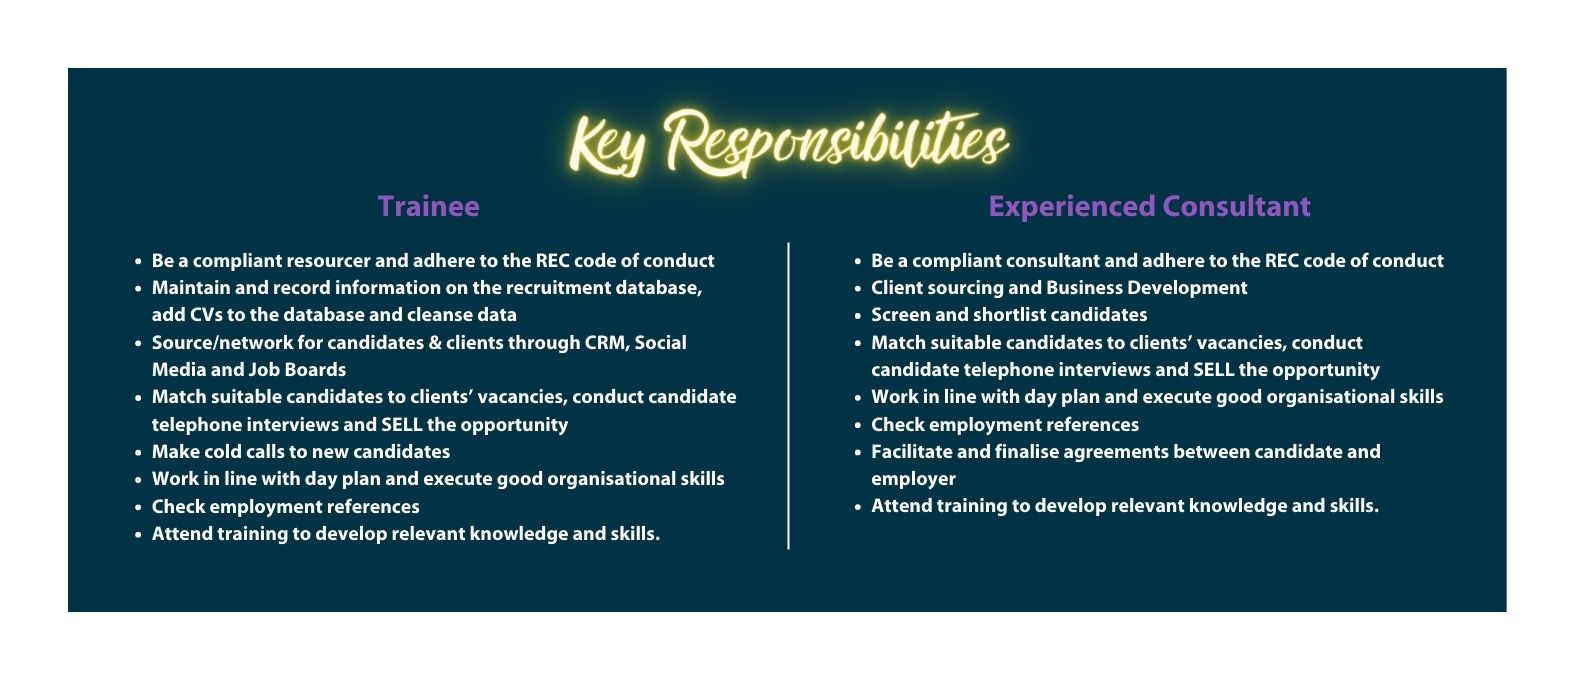 Key Responsibilities